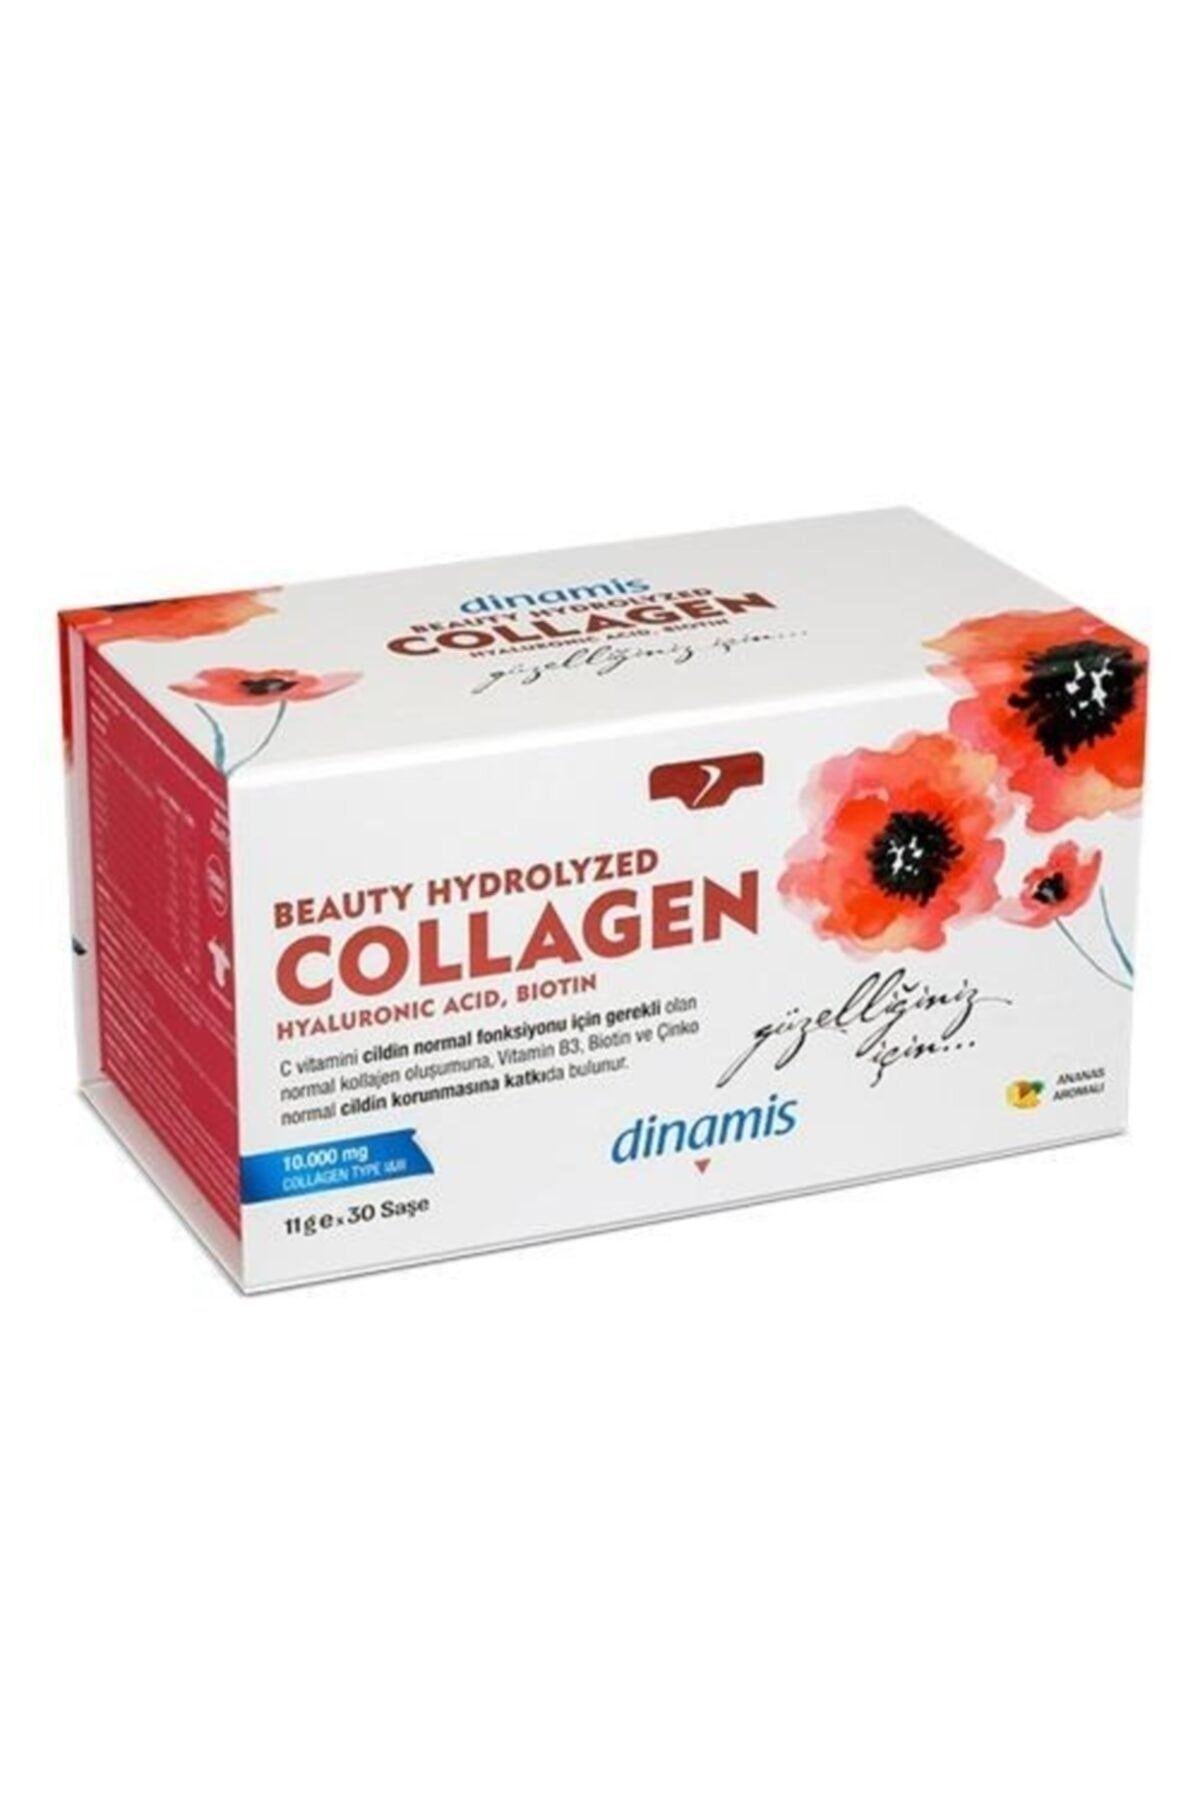 DİNAMİS Beauty Hydrolyzed Collagen 11gr 30 Şase - Ananas Aromalı